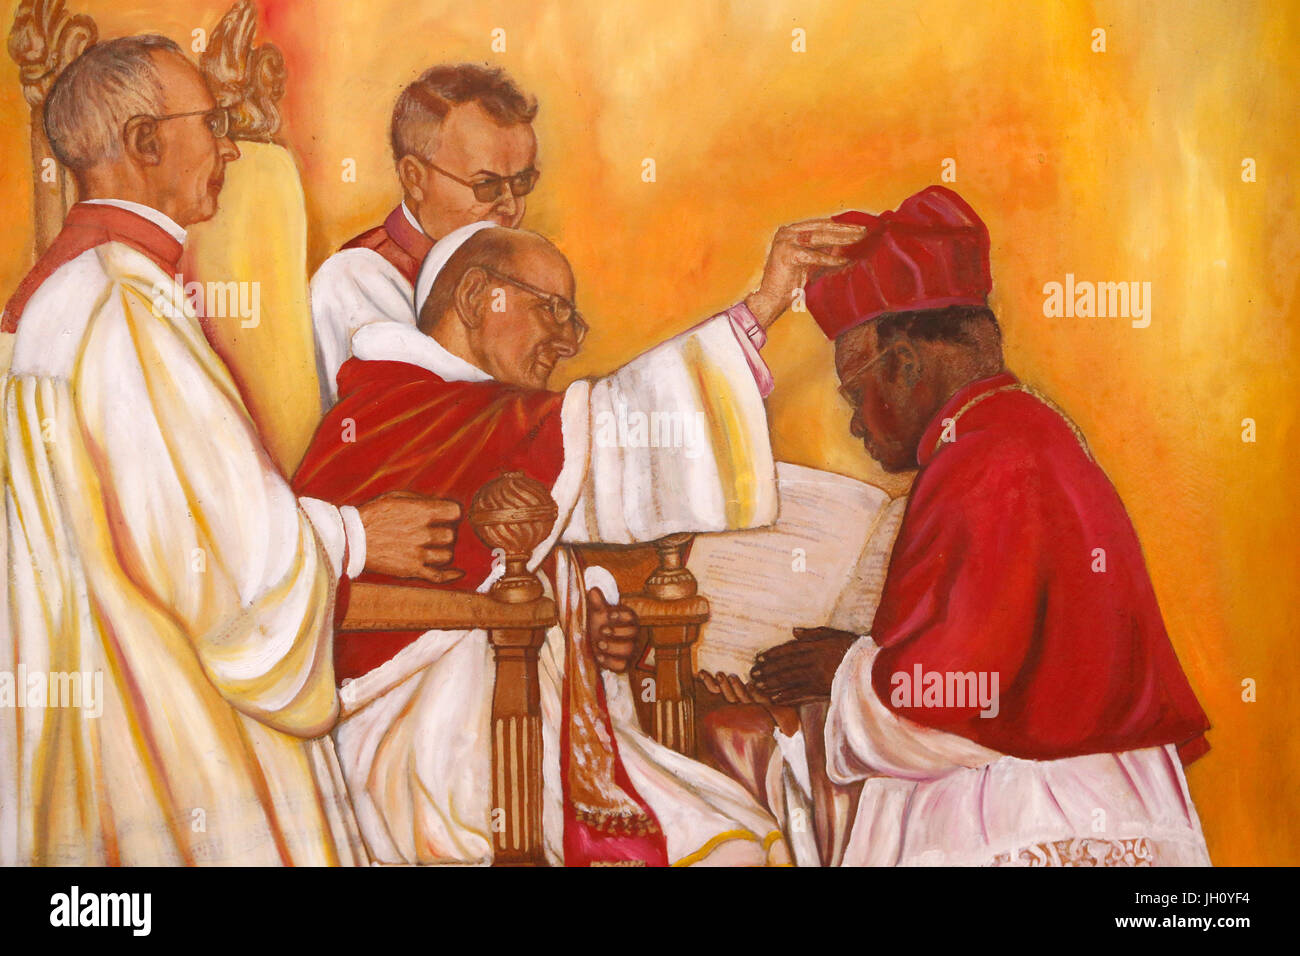 Painting in Namugongo catholic martyrs' shrine church, Kampala. Ordination of a Ugandan bishop. Uganda. Stock Photo